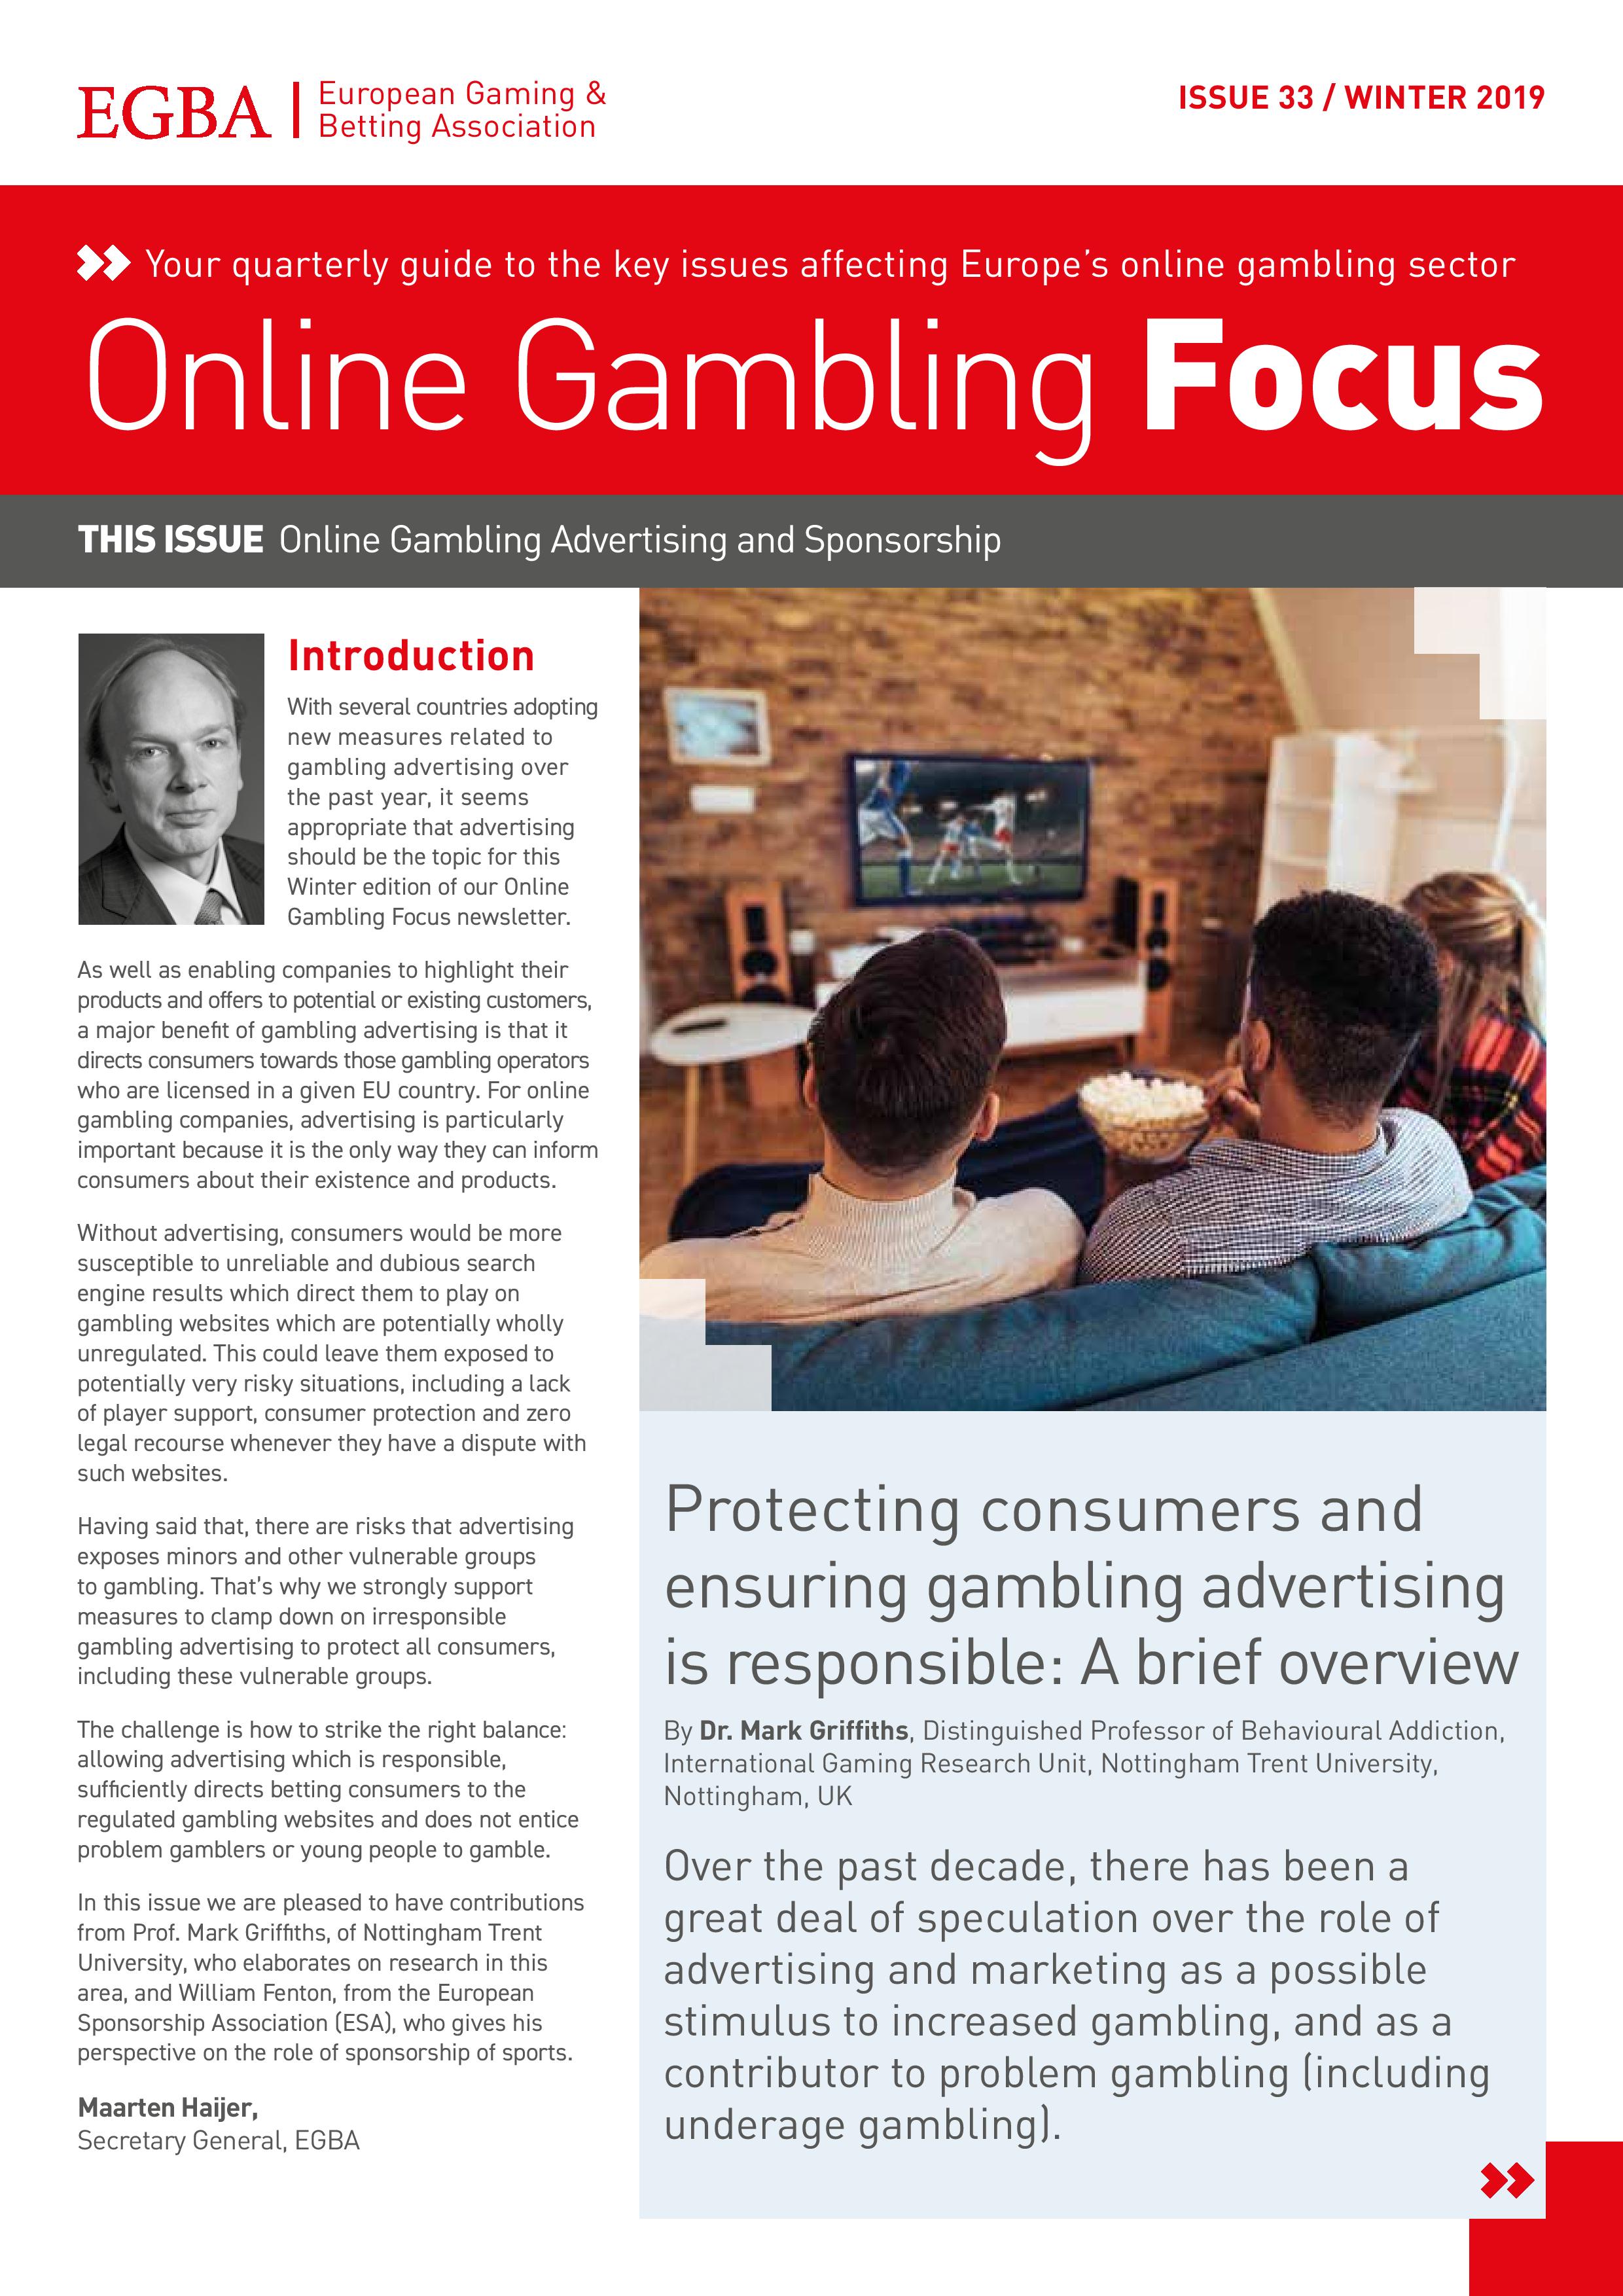 Online Gambling Focus - Winter 2019